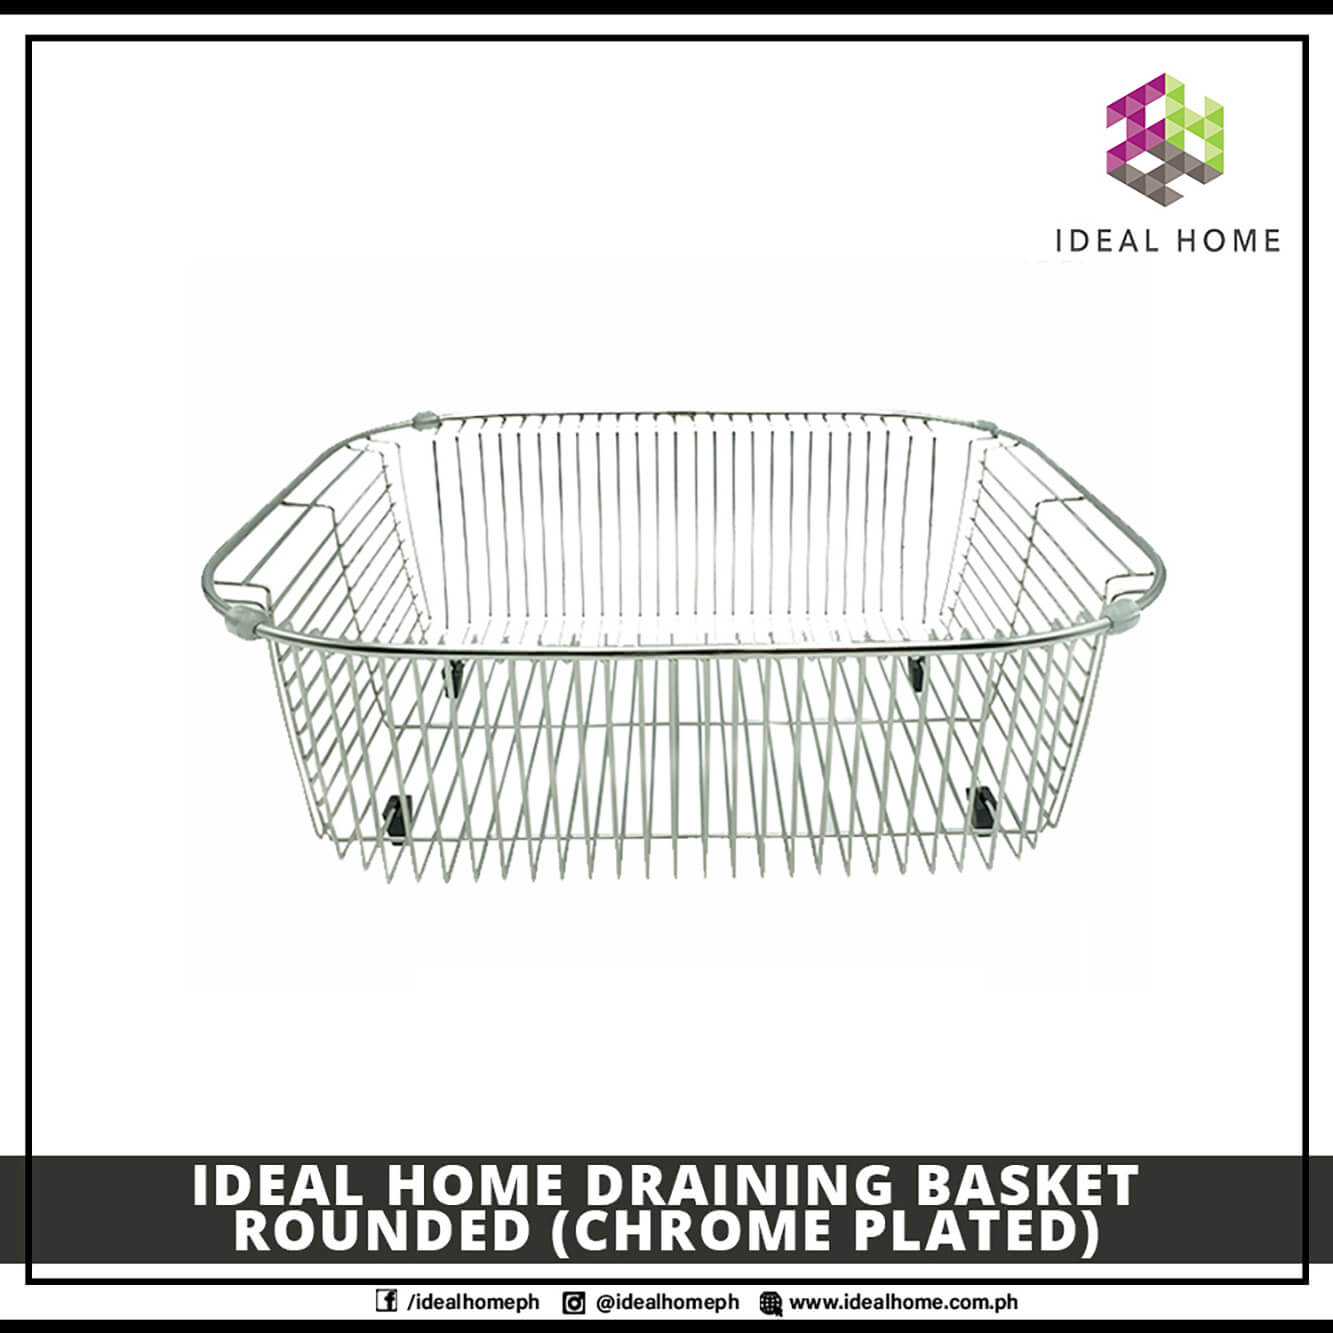 Draining Basket Rounded (Chrome Plated)